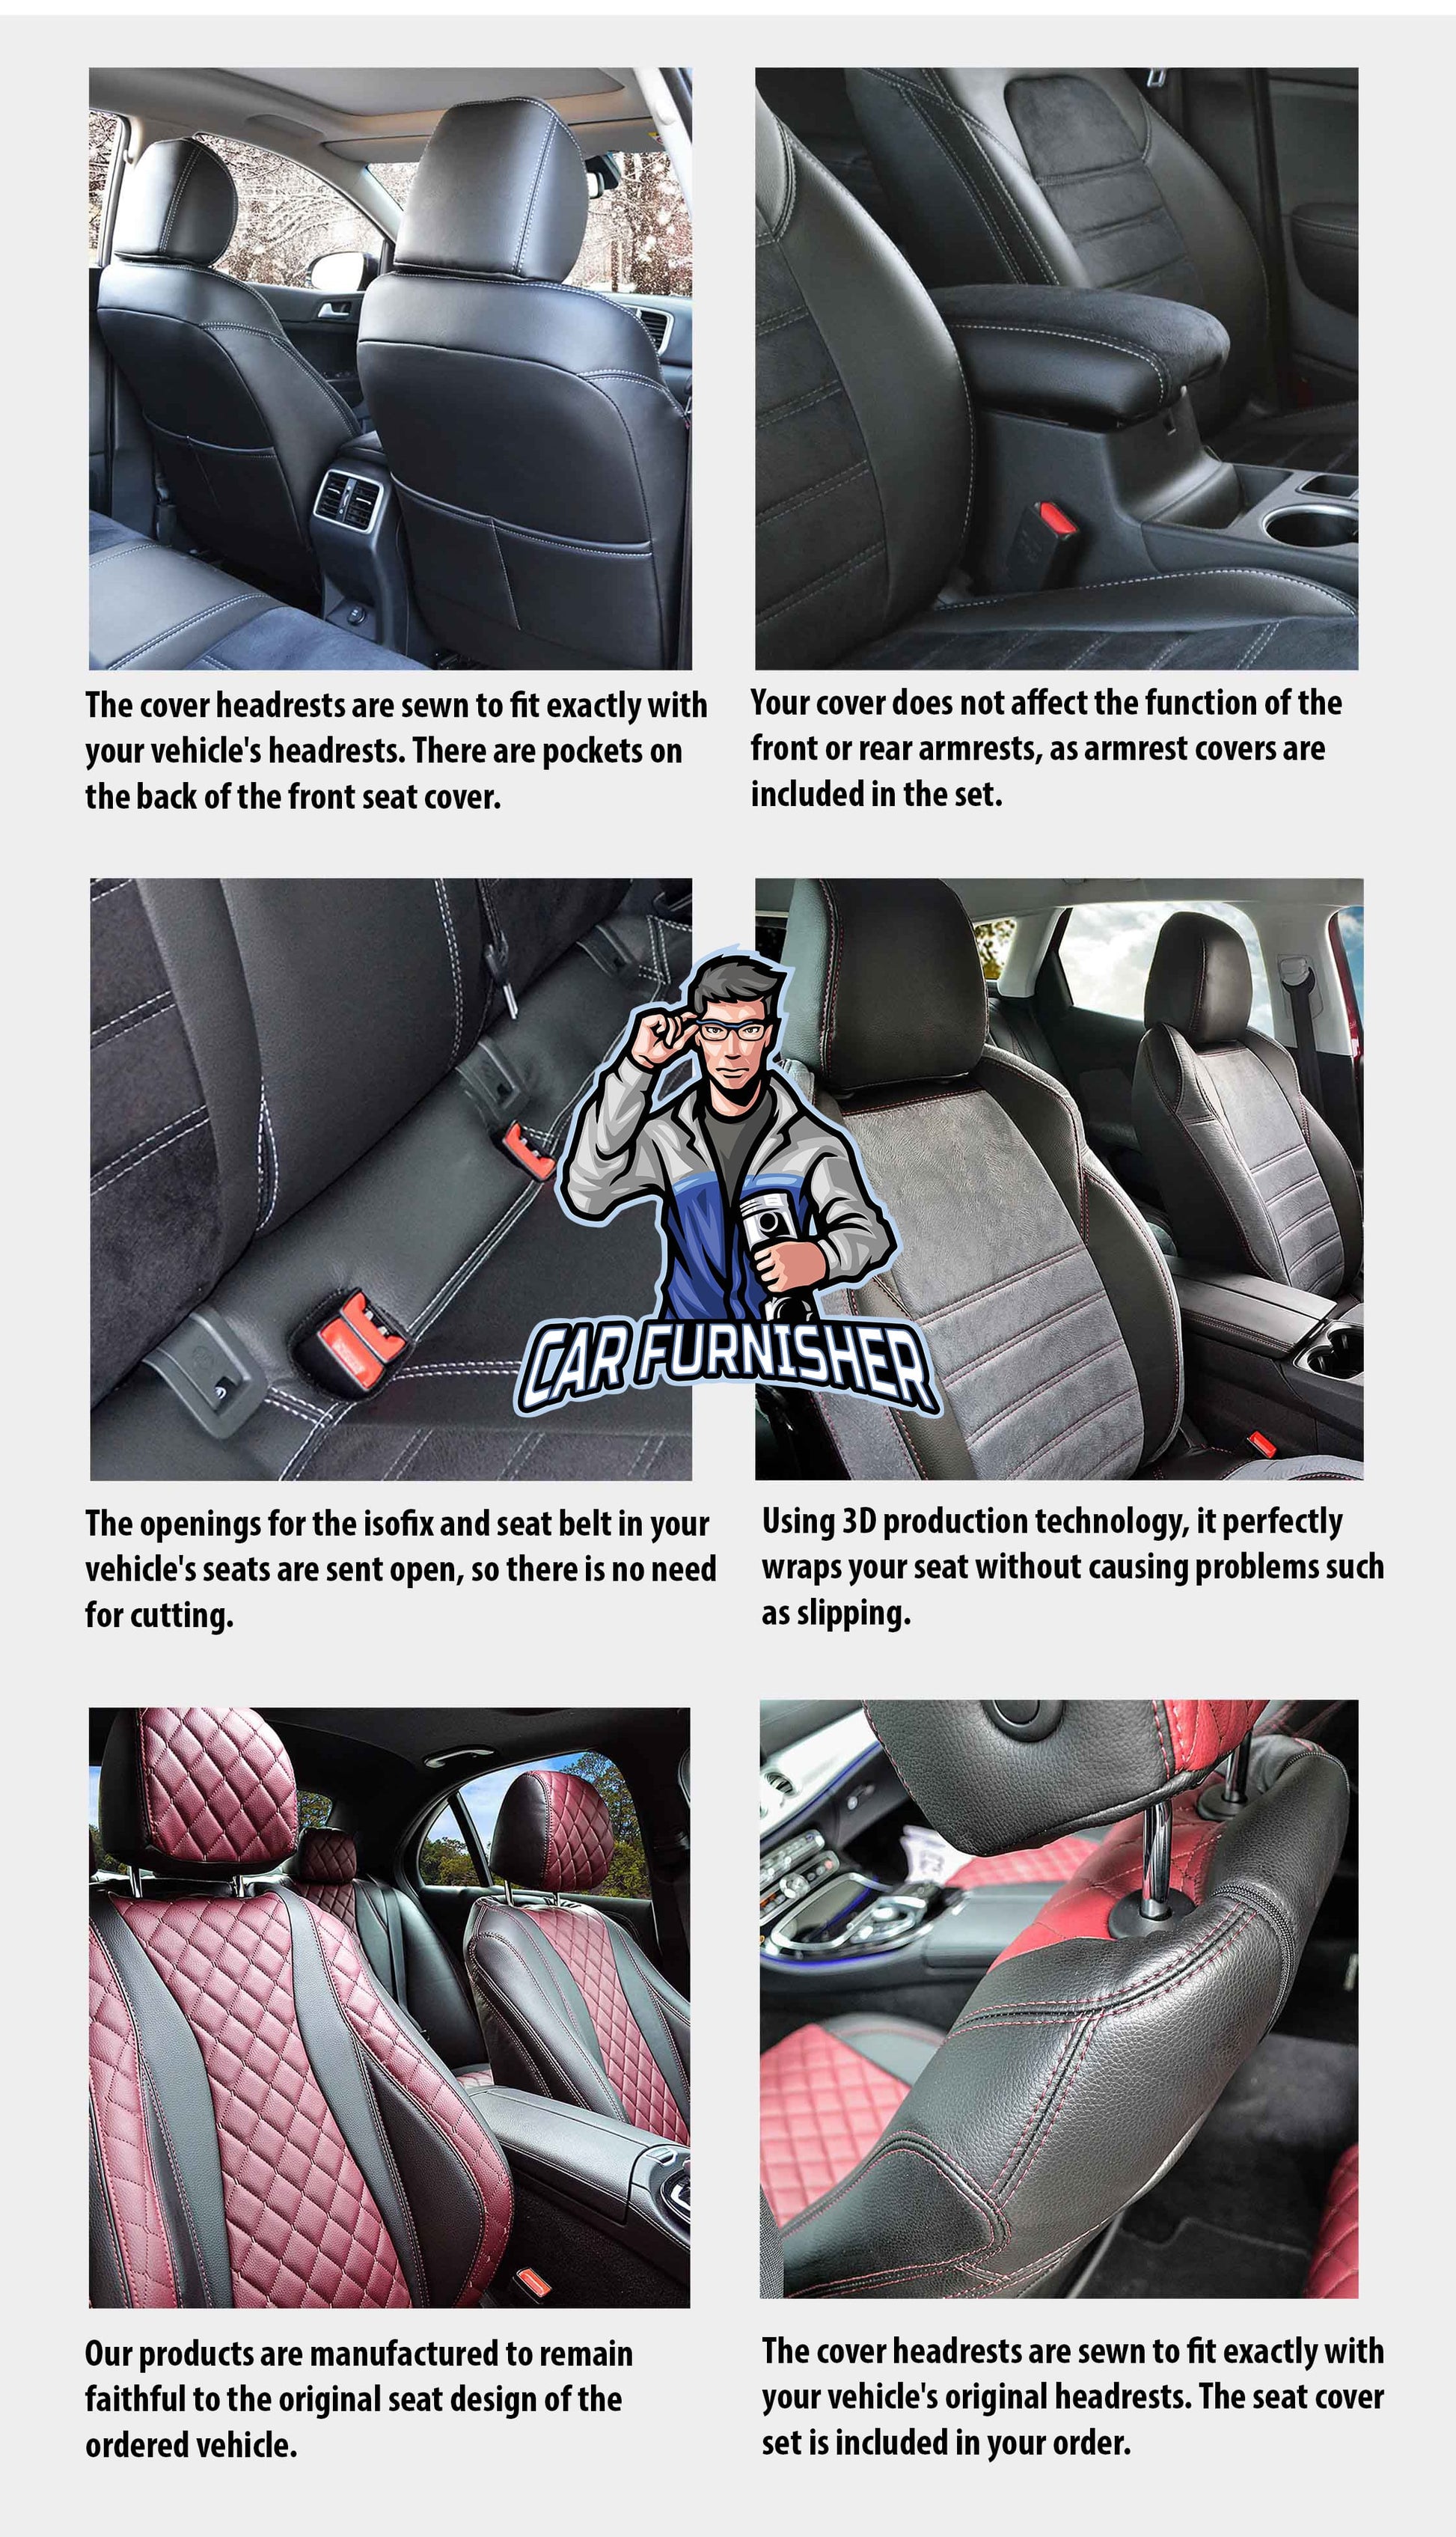 Daihatsu Materia Seat Covers Original Jacquard Design Dark Beige Jacquard Fabric